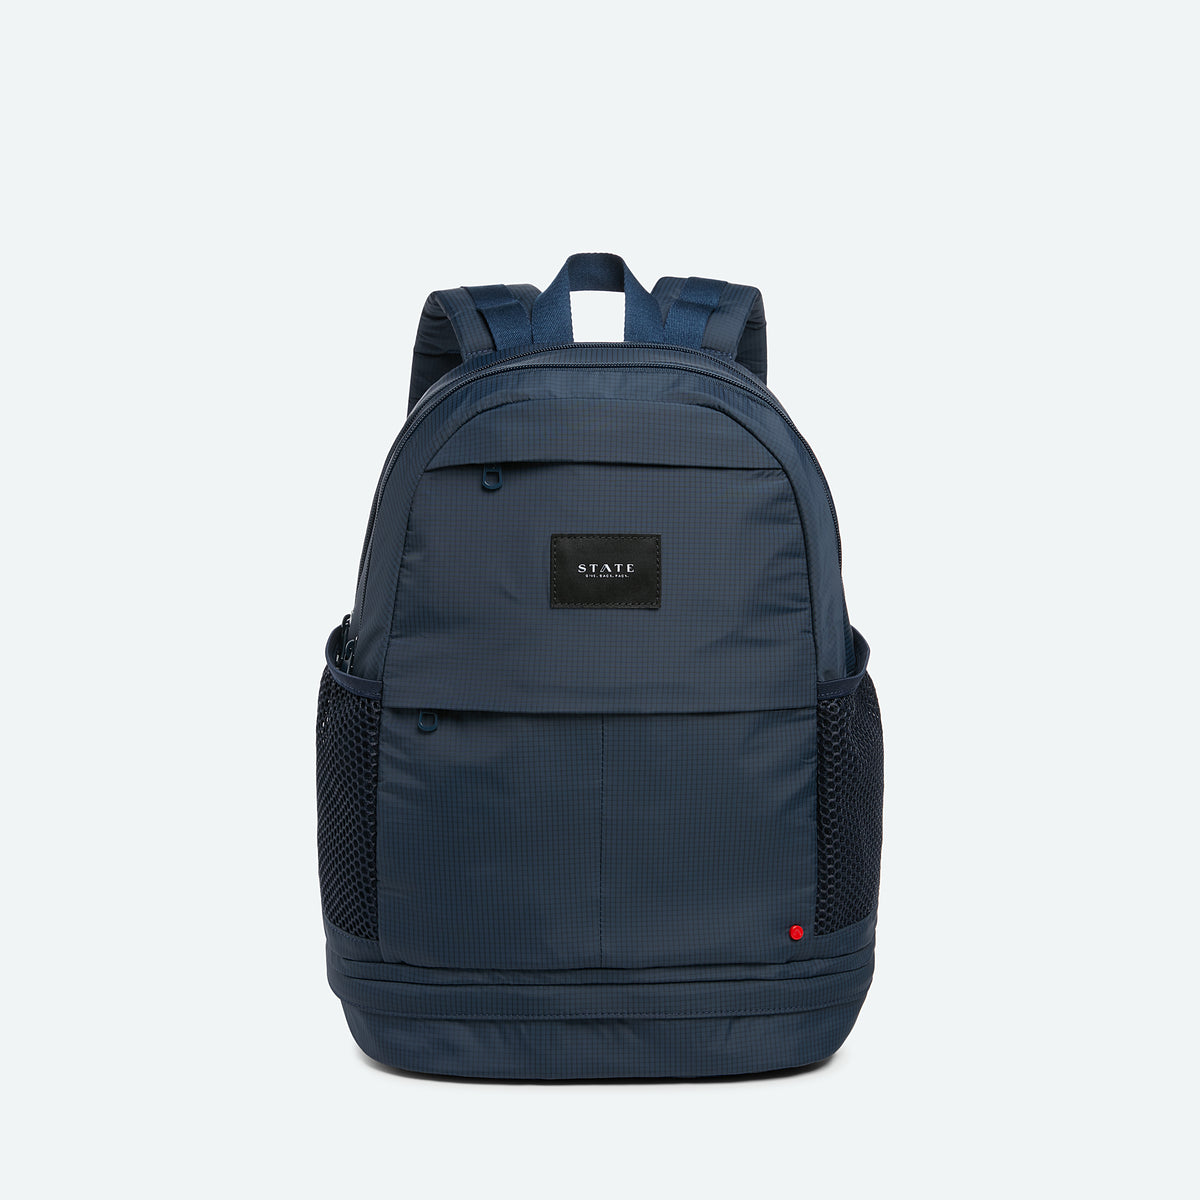 STATE Bags - Lenox Backpack